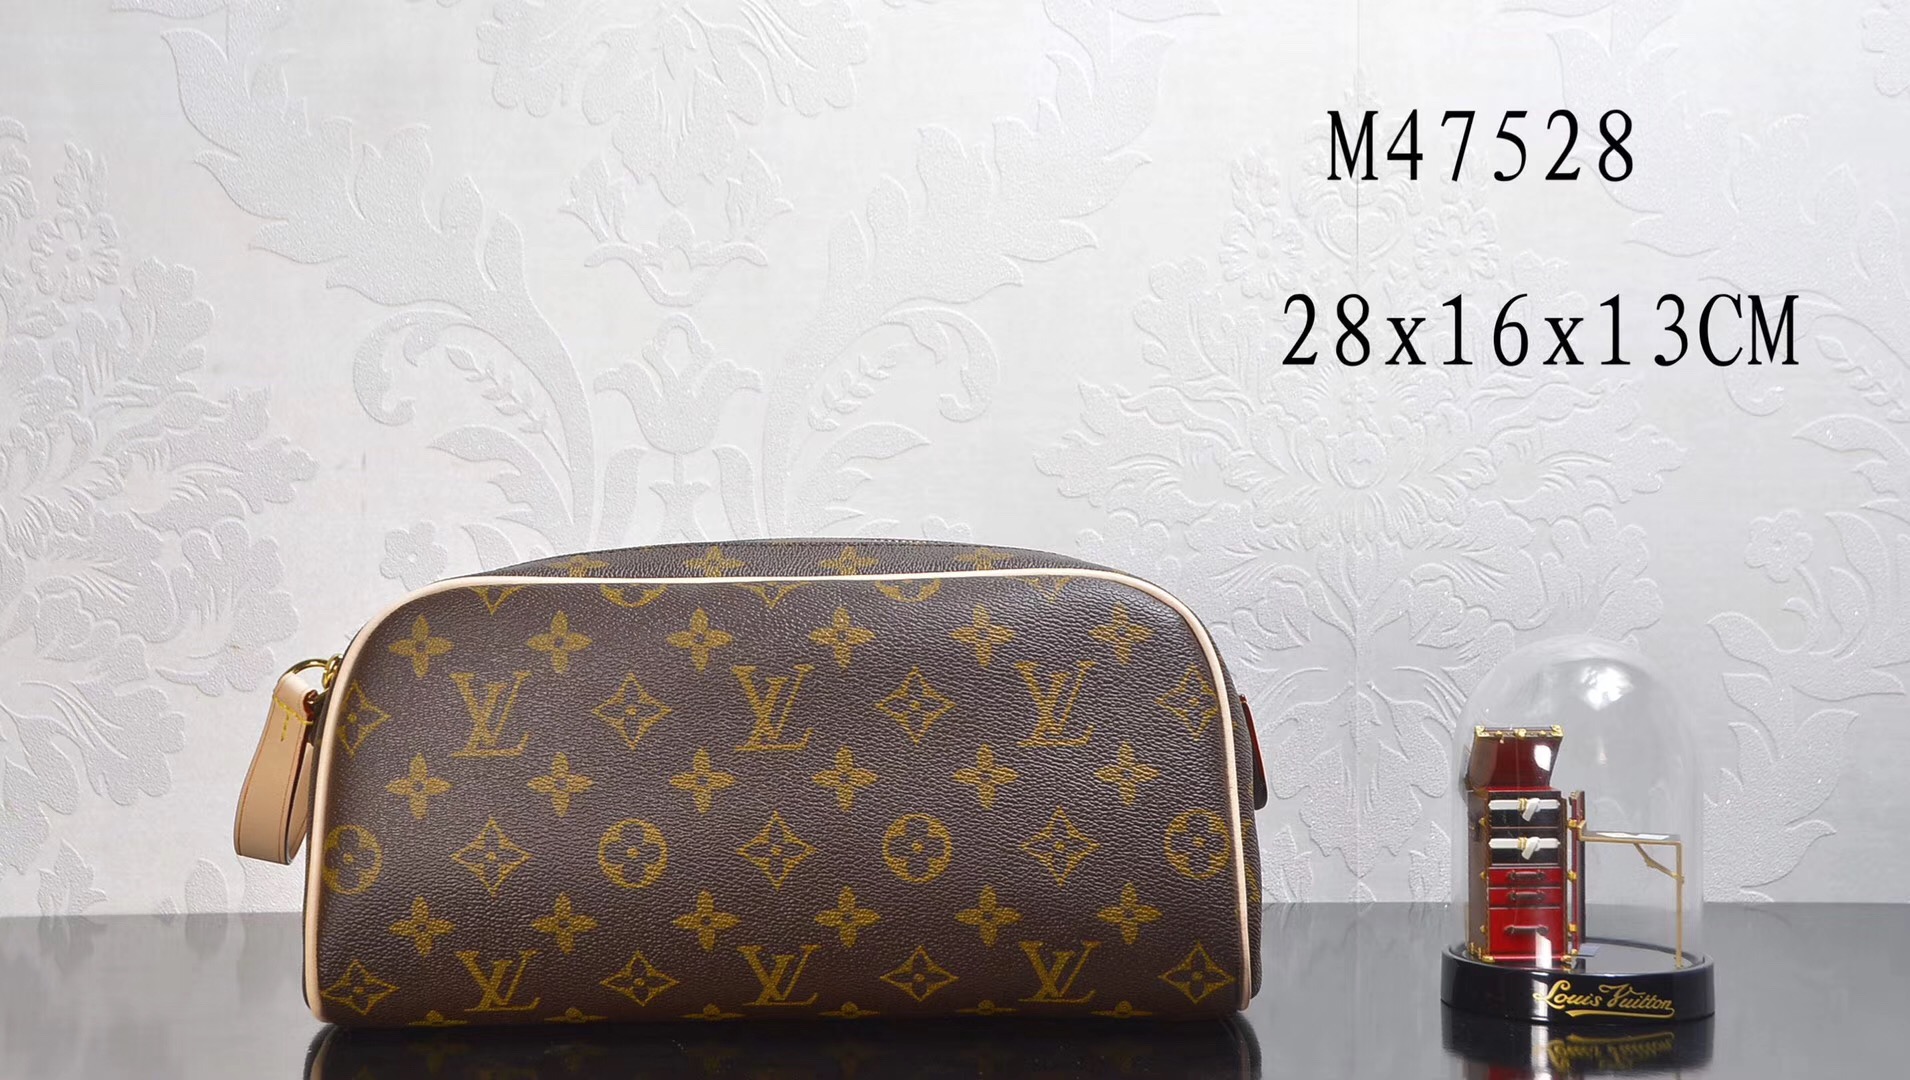 LV Louis Vuitton M47528 Monogram King bags Size Toiletry Handbags Brown